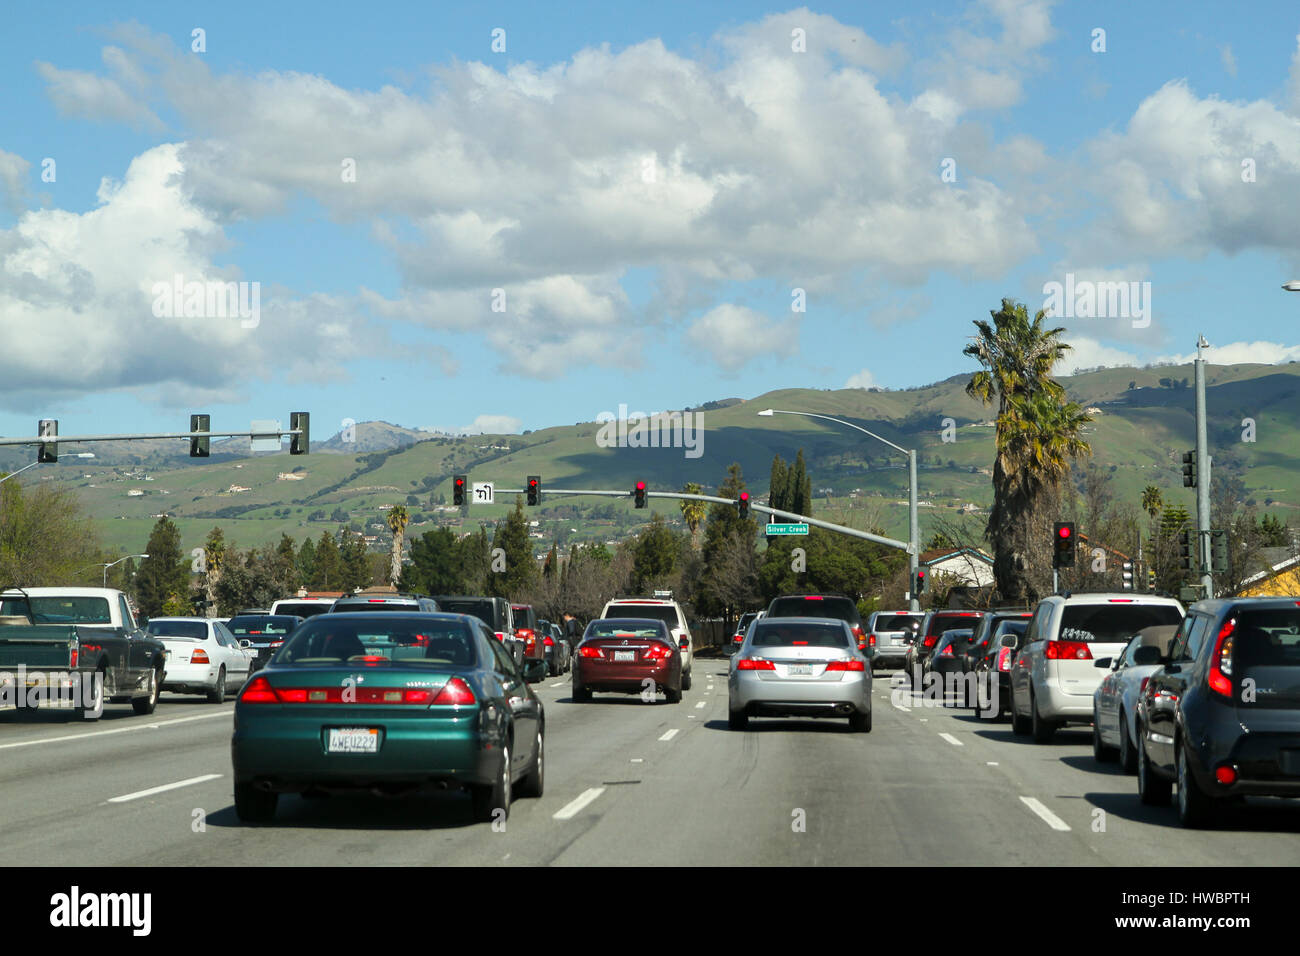 Cars on the road near San Jose, California, United States Stock Photo